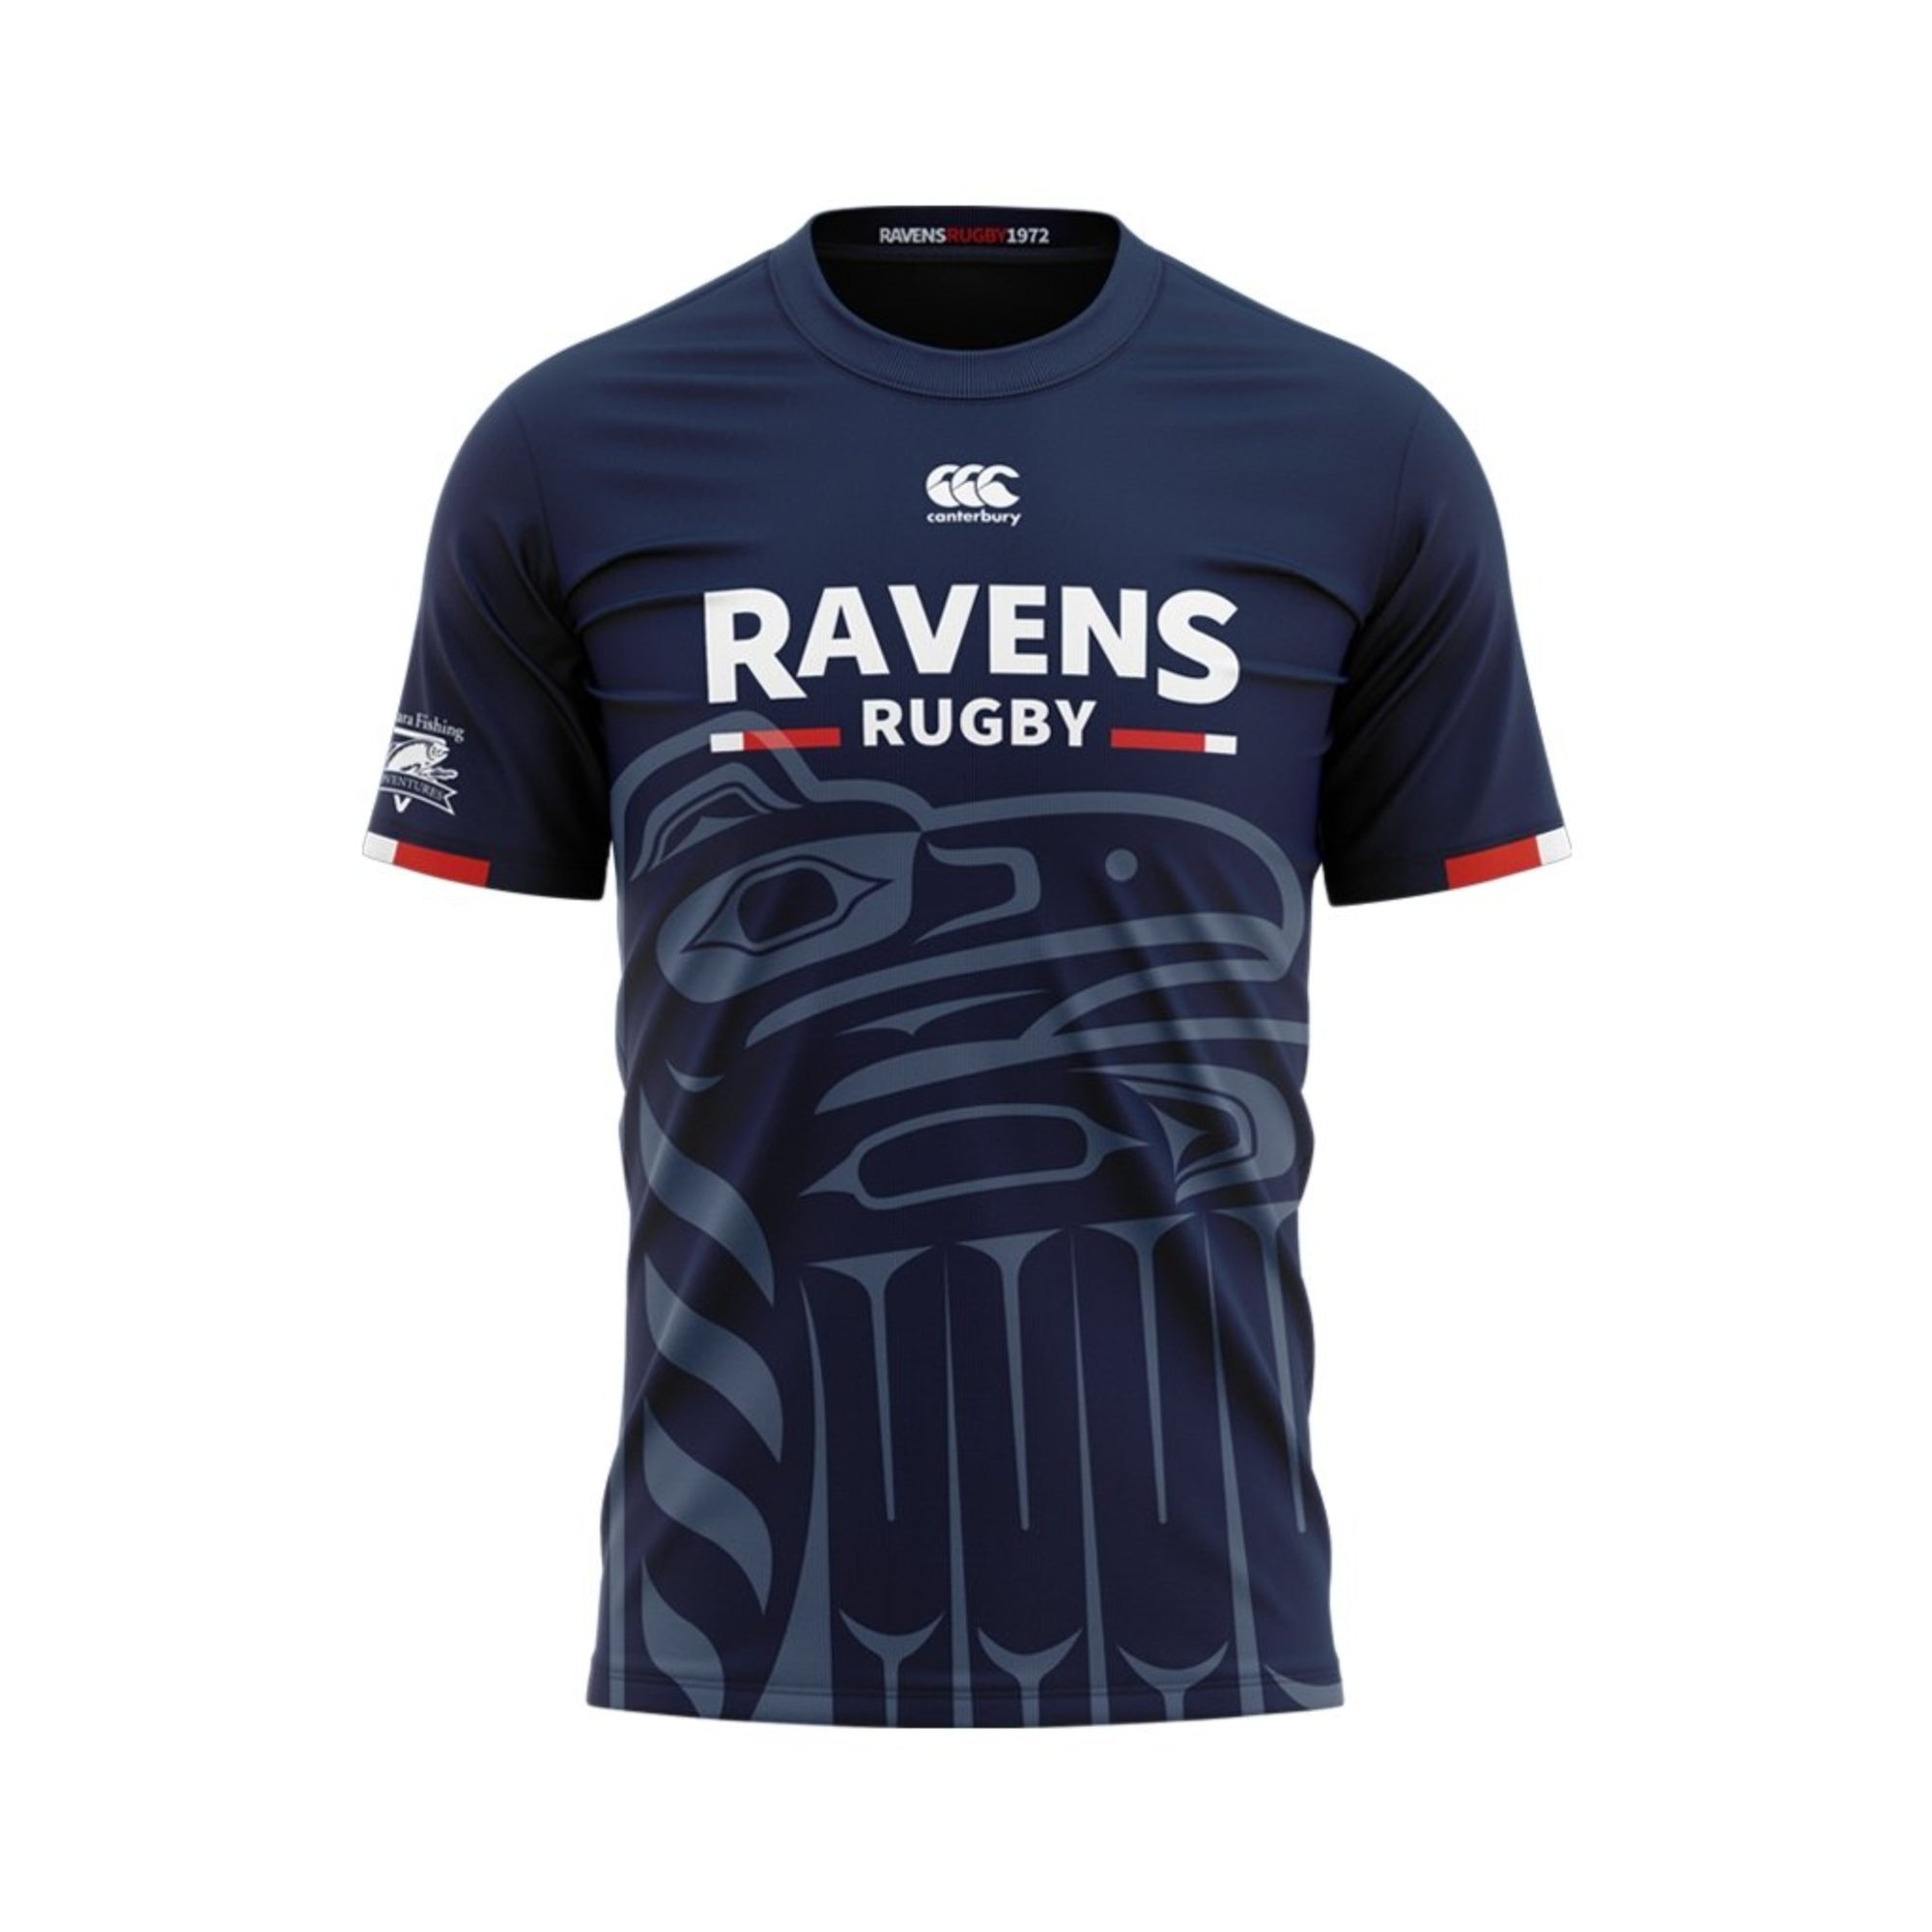 UBCOB Ravens CCC Performance T-Shirt - Navy - The Rugby Shop